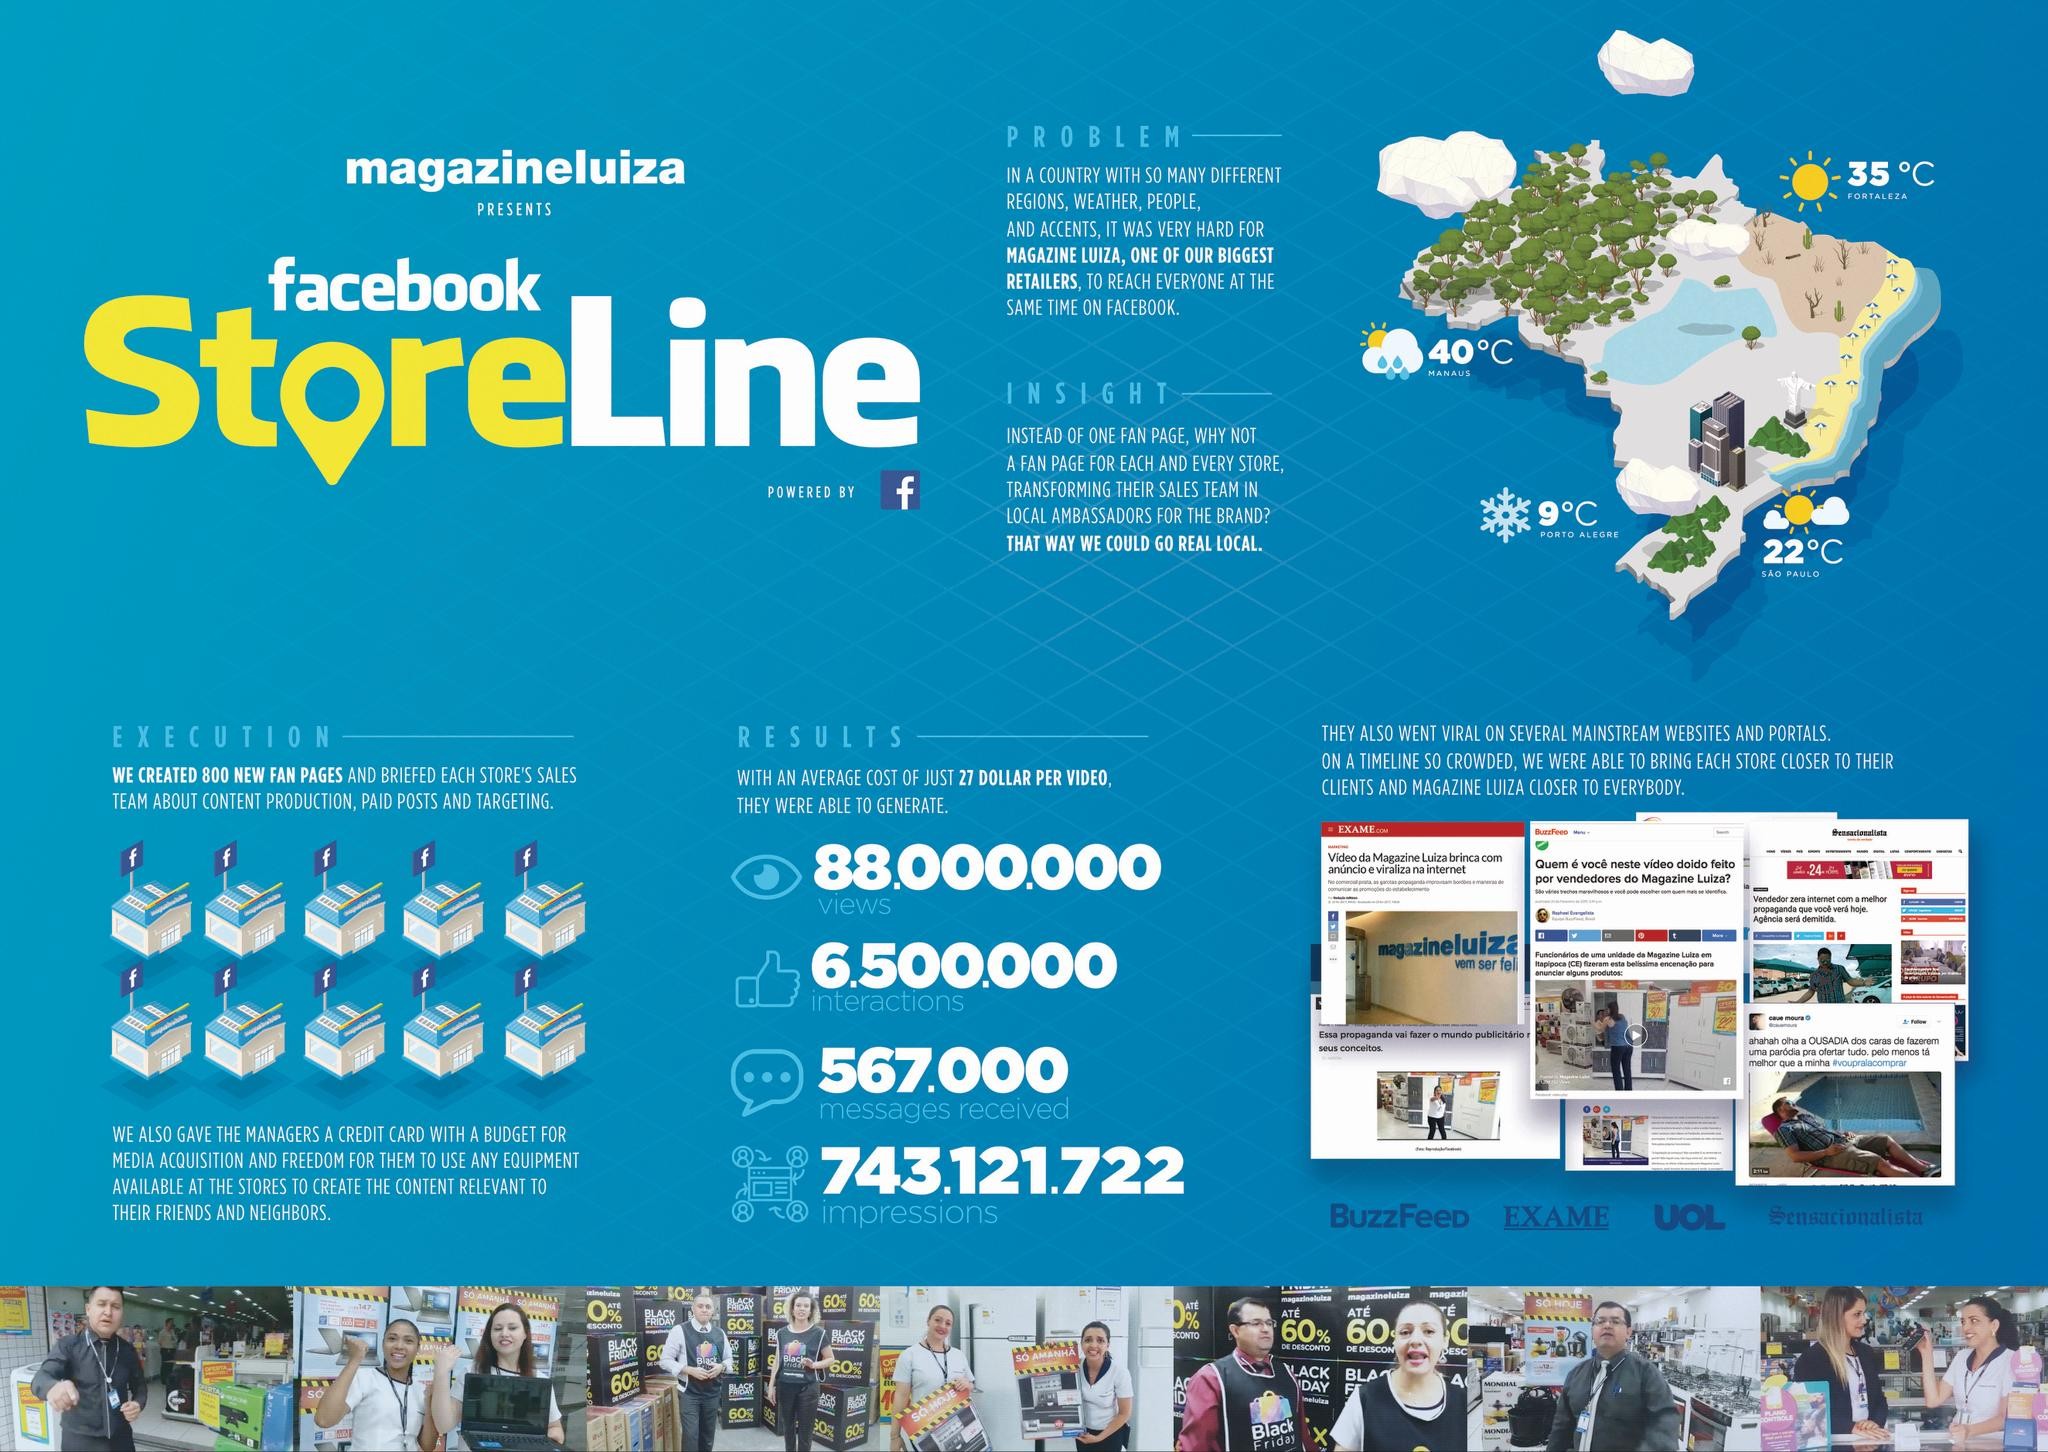 Facebook Store Line by Magazine Luiza